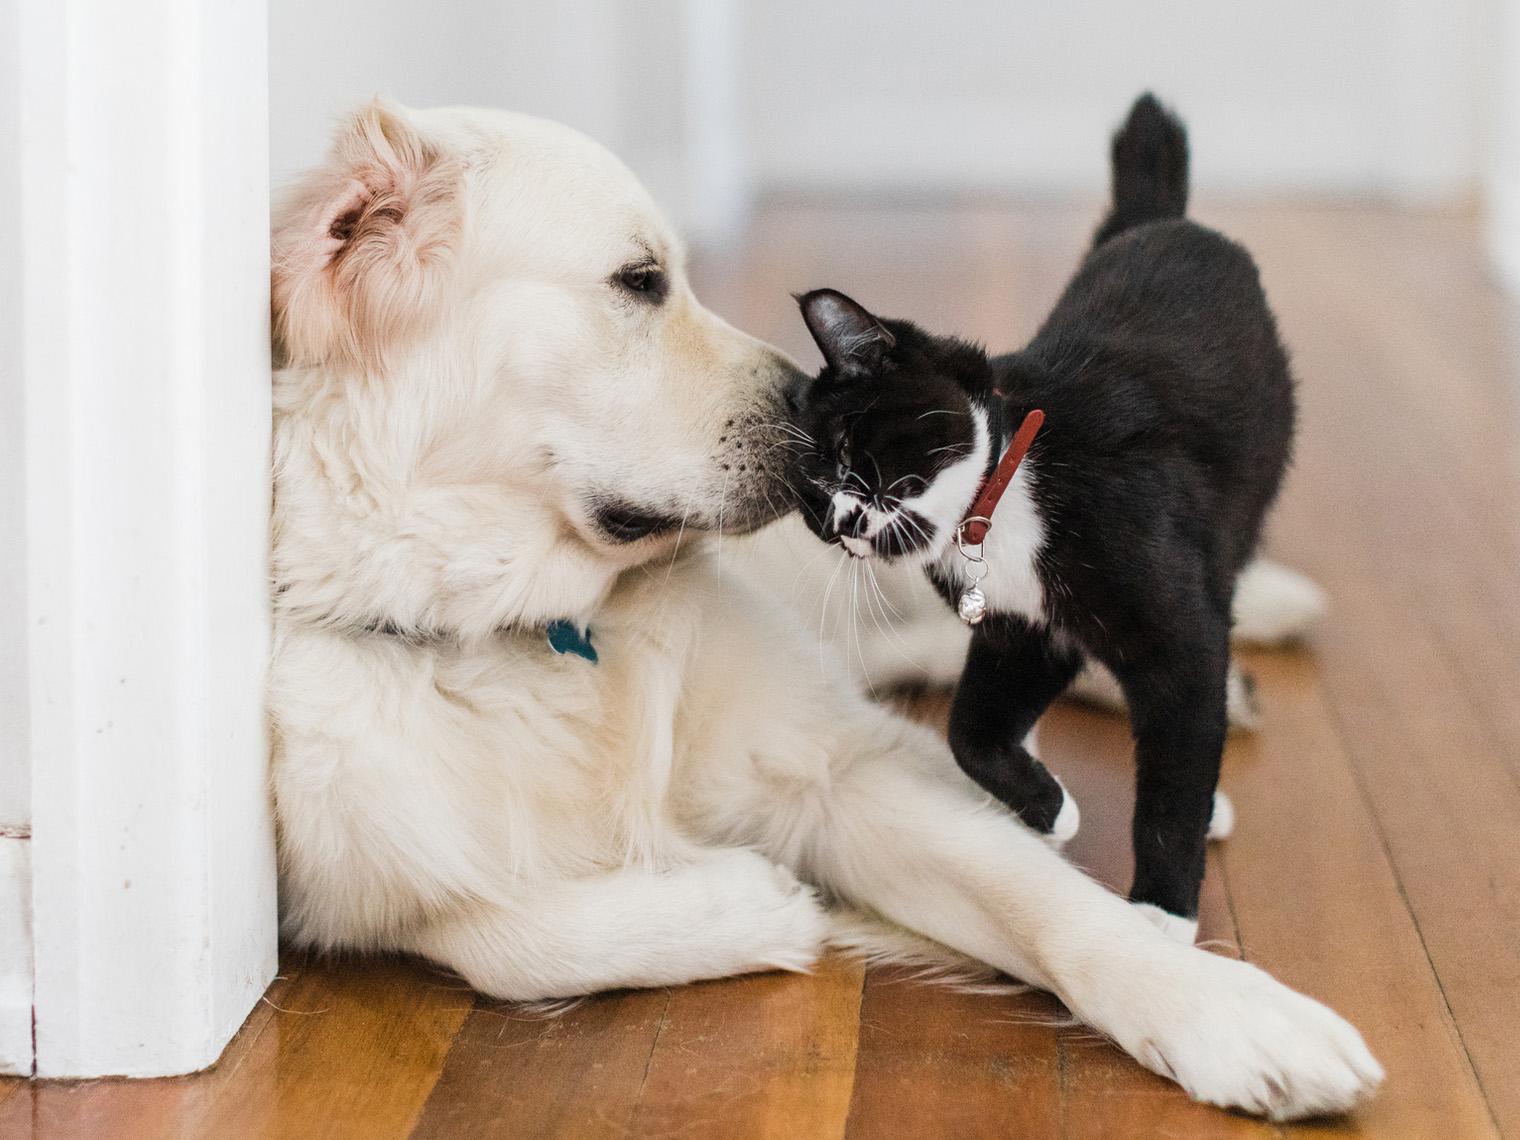 Black and white manx cat with dog